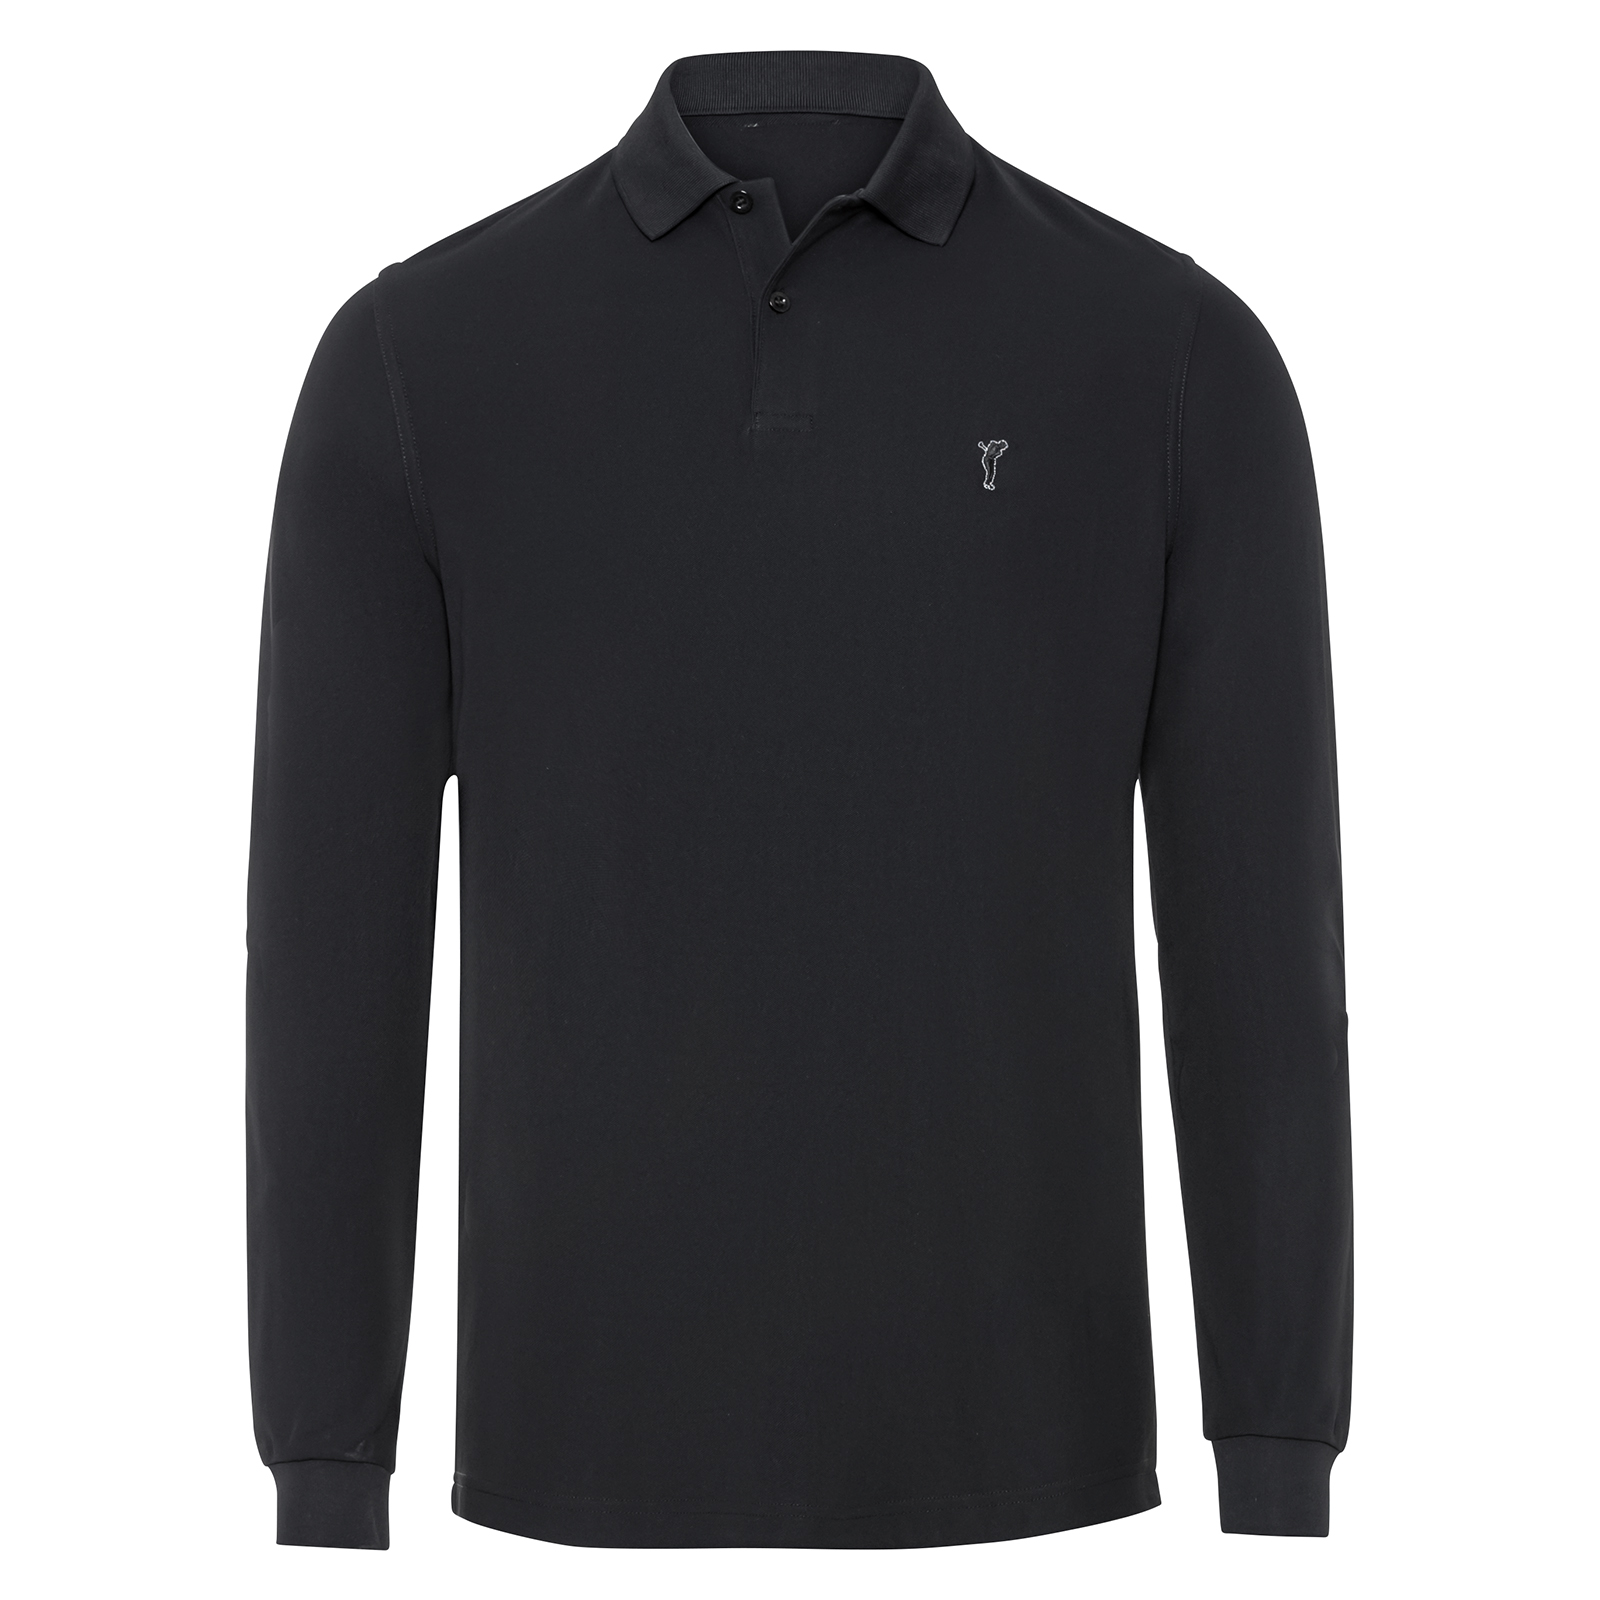 Men's classical long-sleeved golf polo shirt 